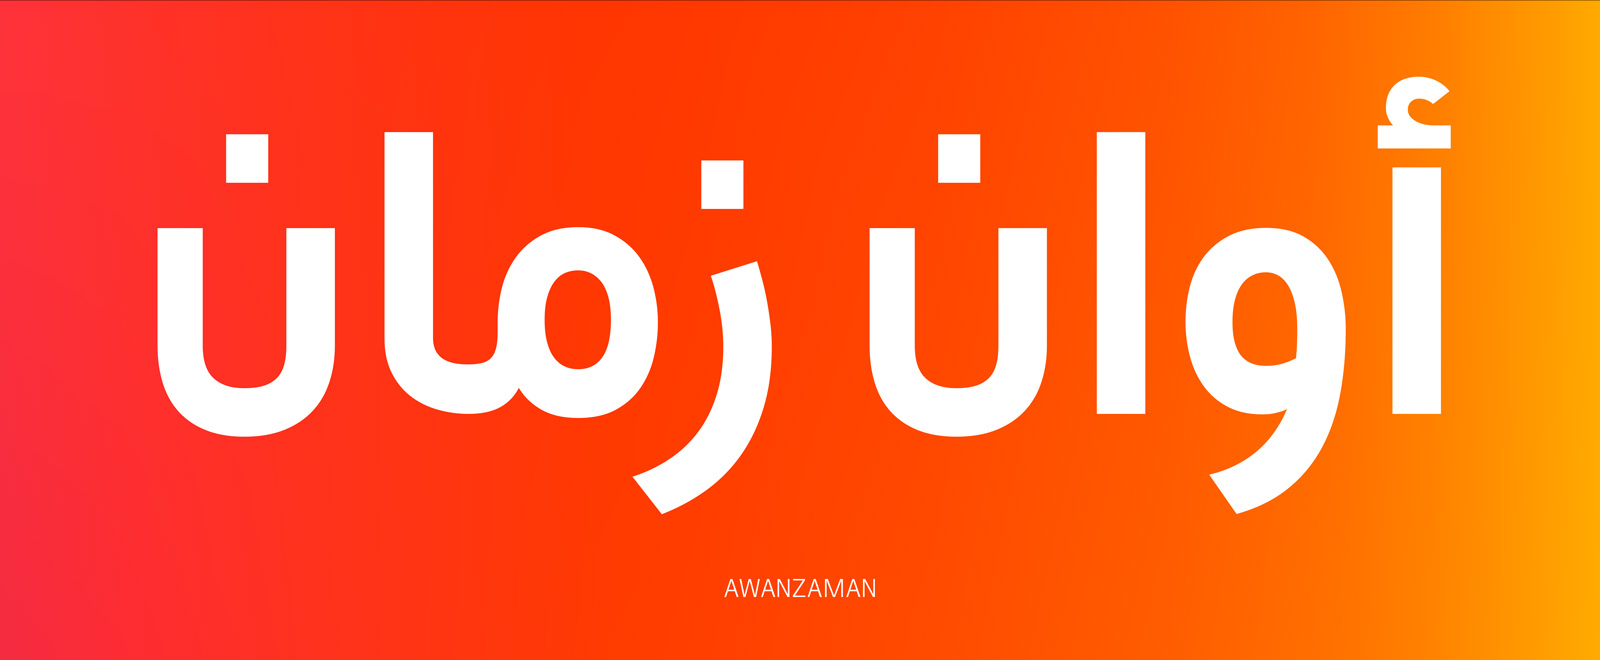 AWANZAMAN Designed by Juliet Shen & Mamoun Sakkal